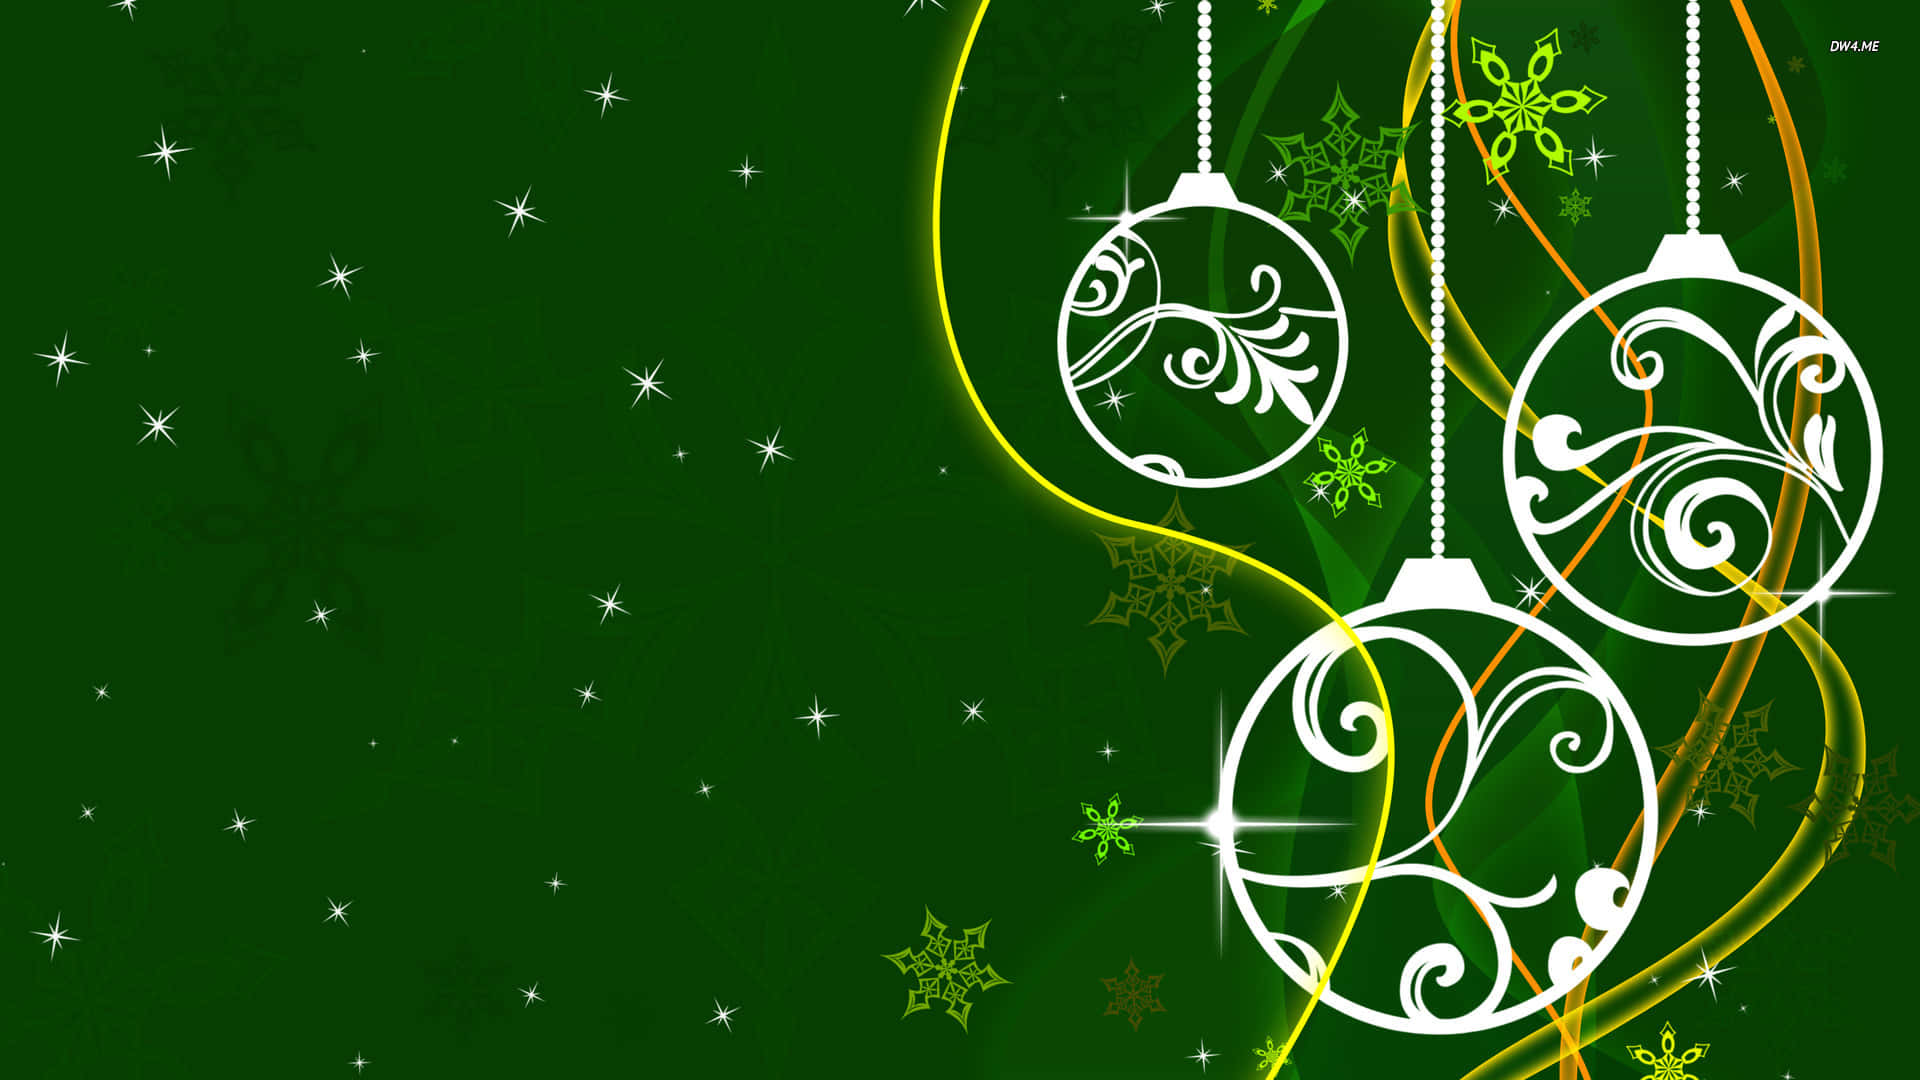 Have a Dark Green Christmas Wallpaper